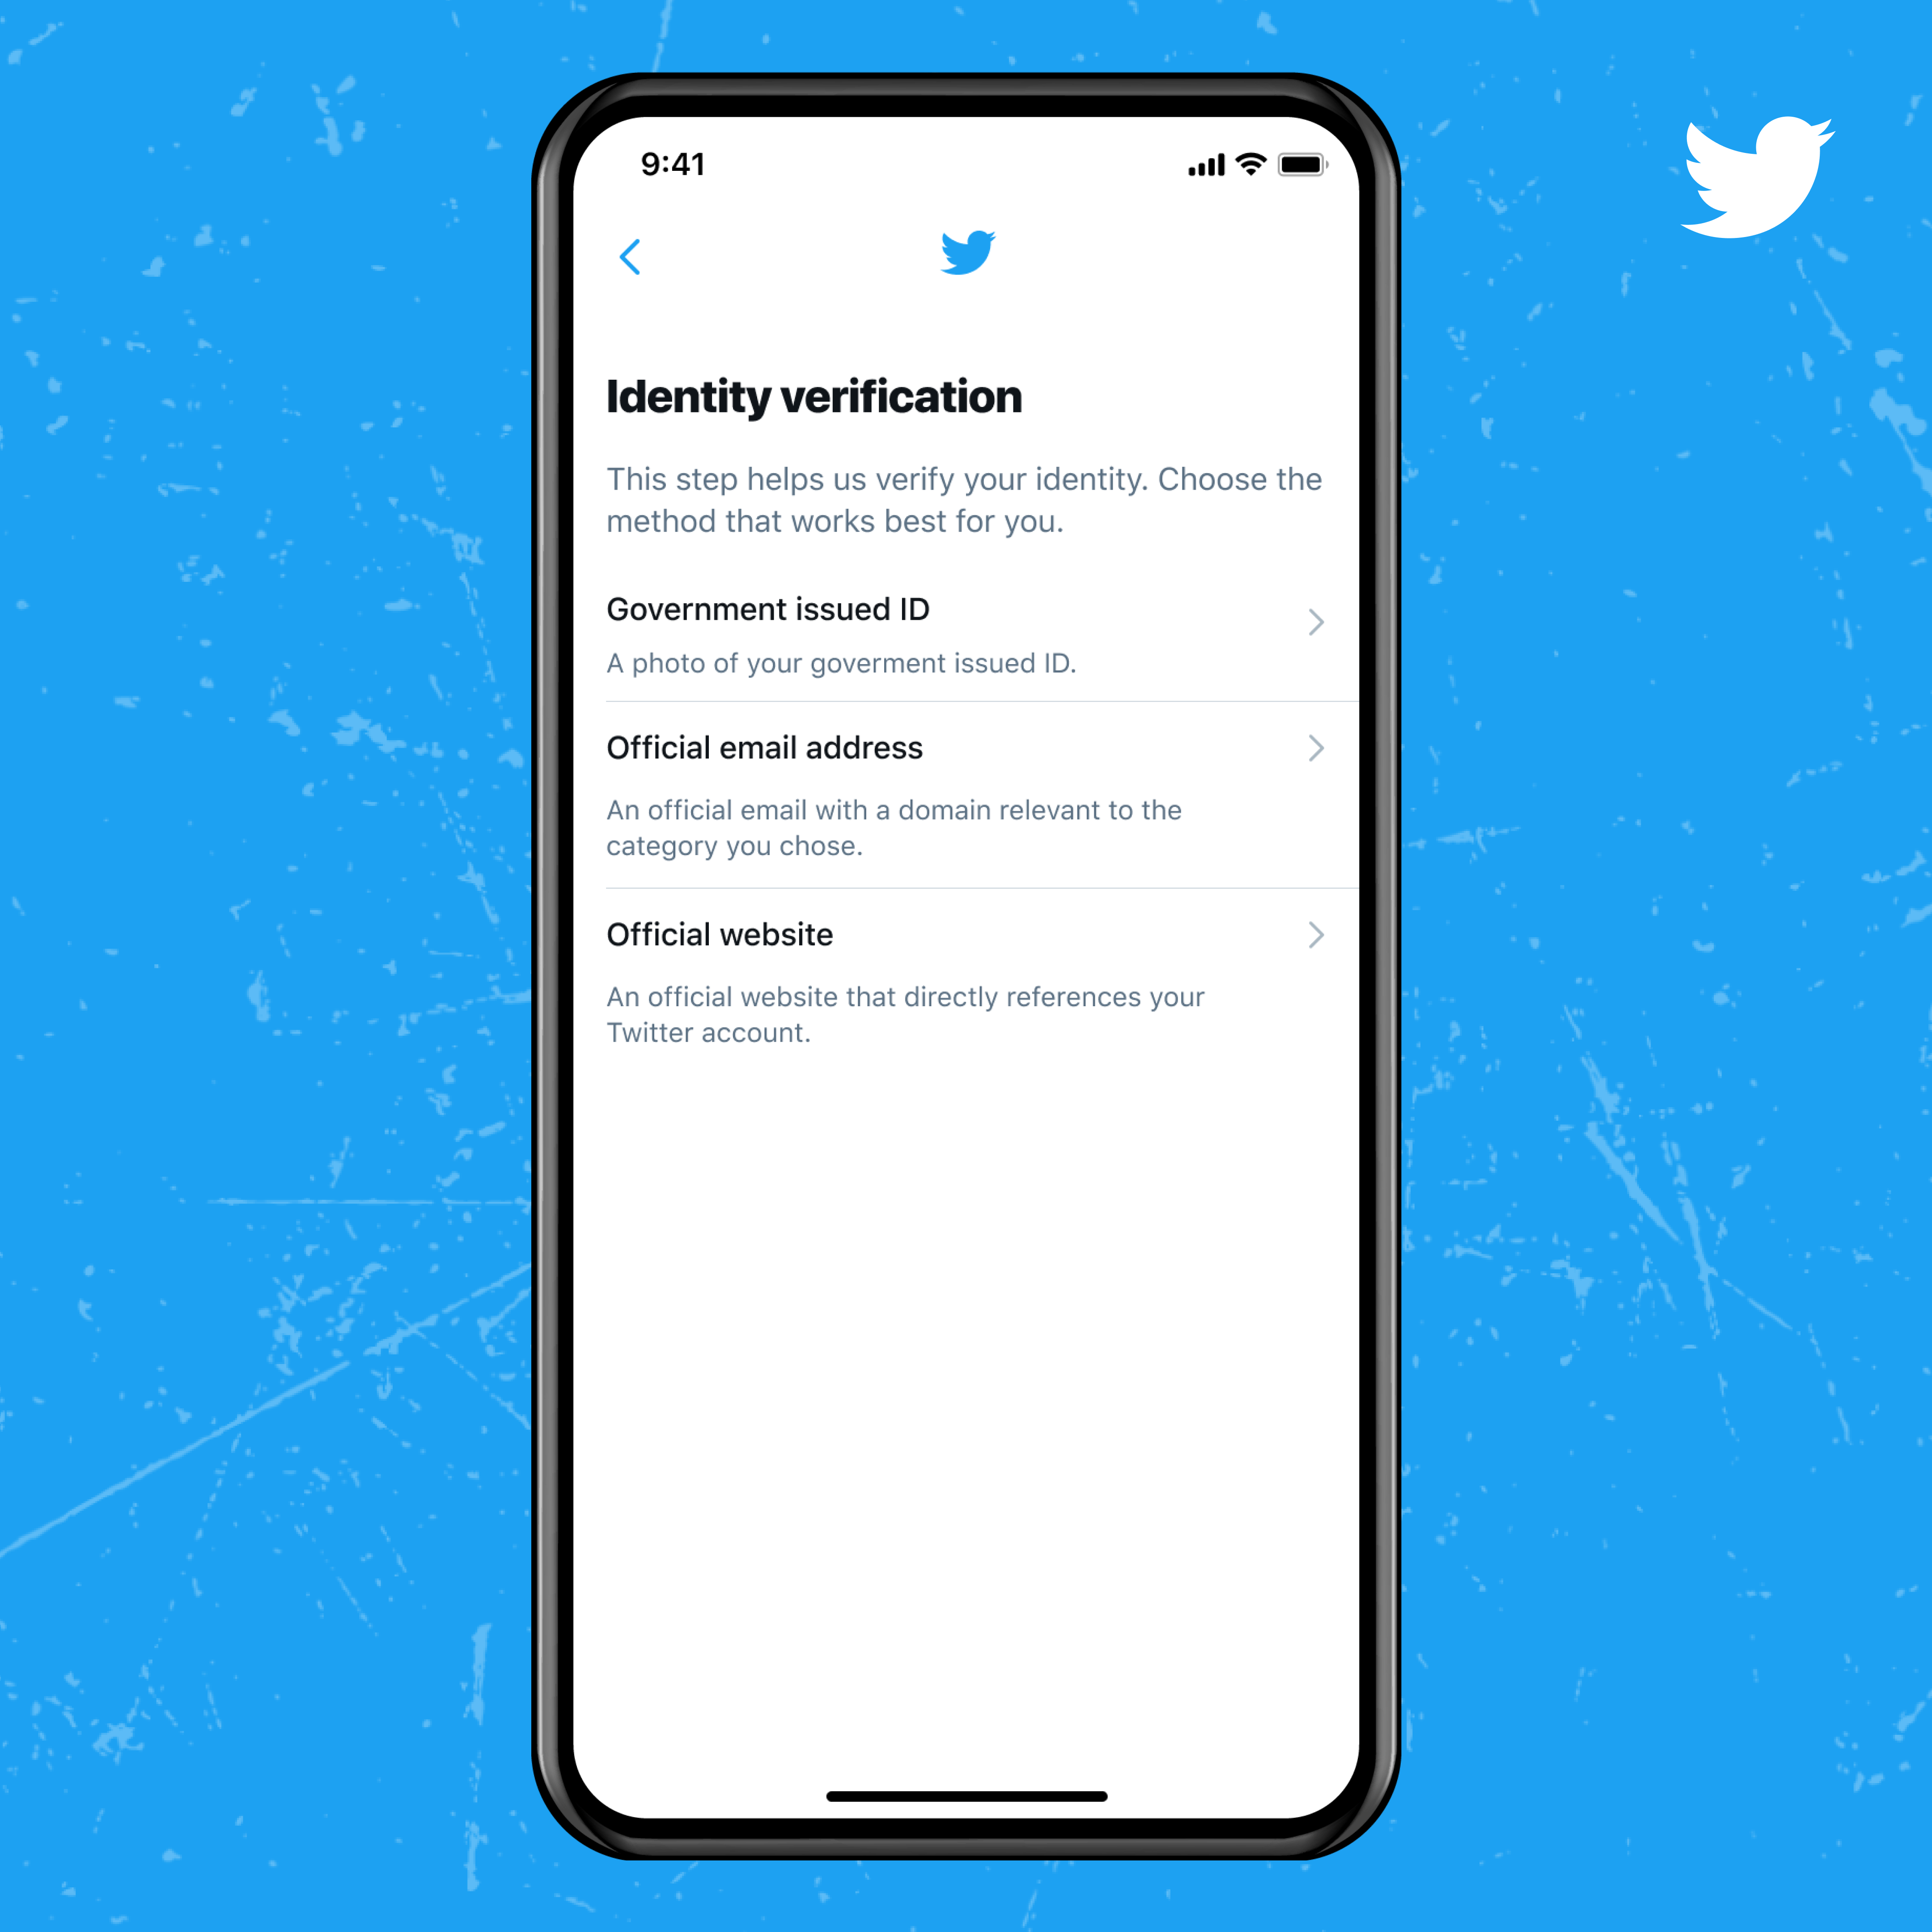 Twitter Verification Open For Public Applications